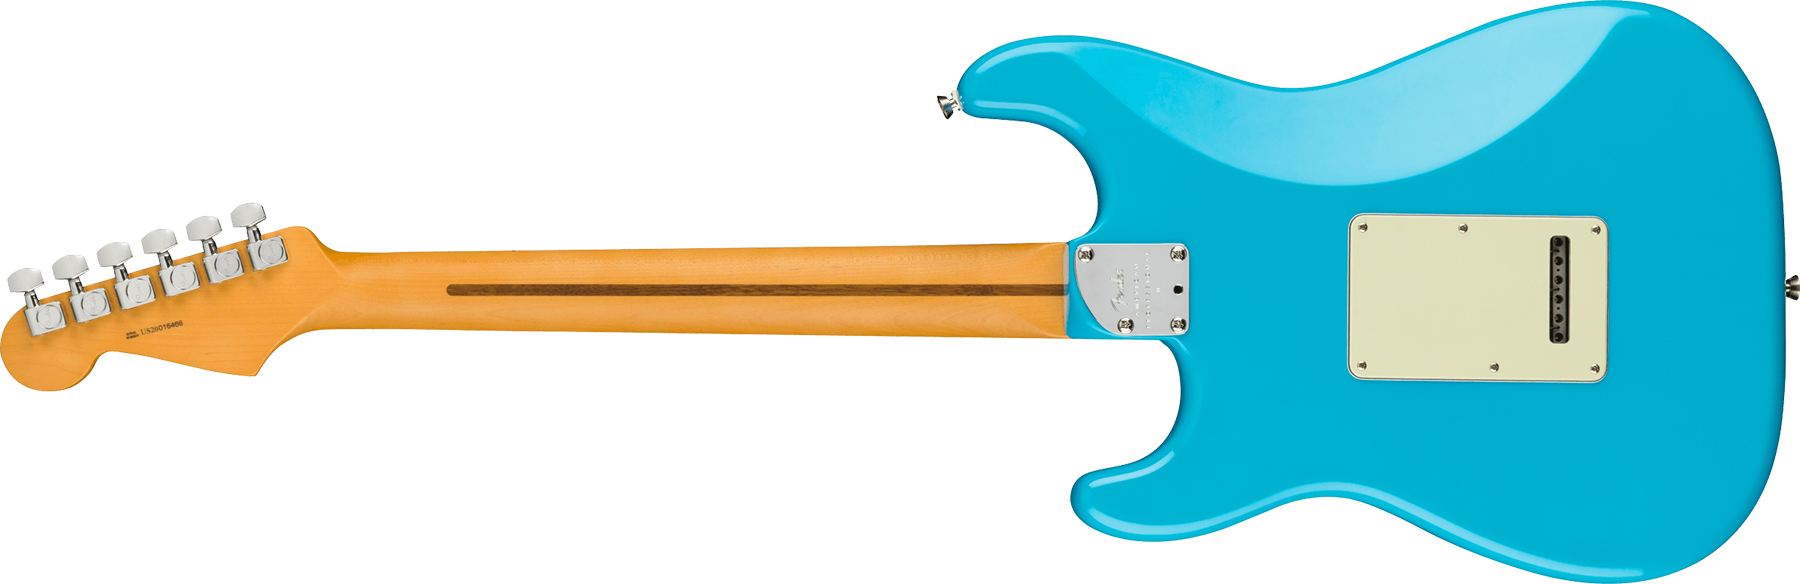 Fender Strat American Professional Ii Usa Mn - Miami Blue - Guitare Électrique Forme Str - Variation 1